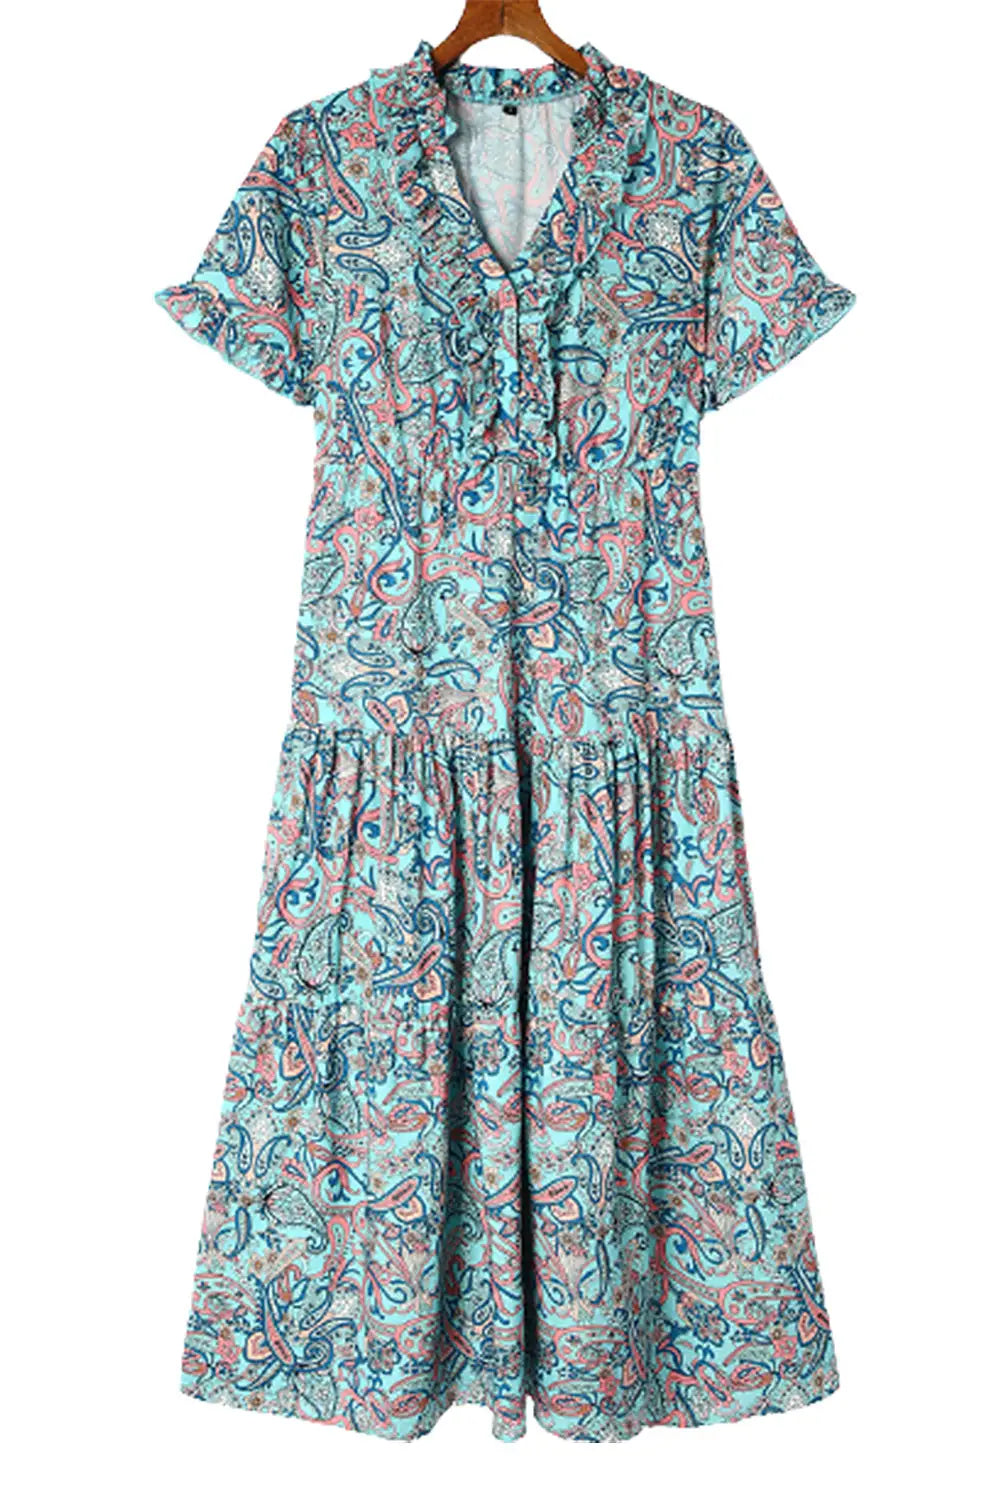 Sky blue paisley print boho holiday ruffle tiered maxi dress - dresses